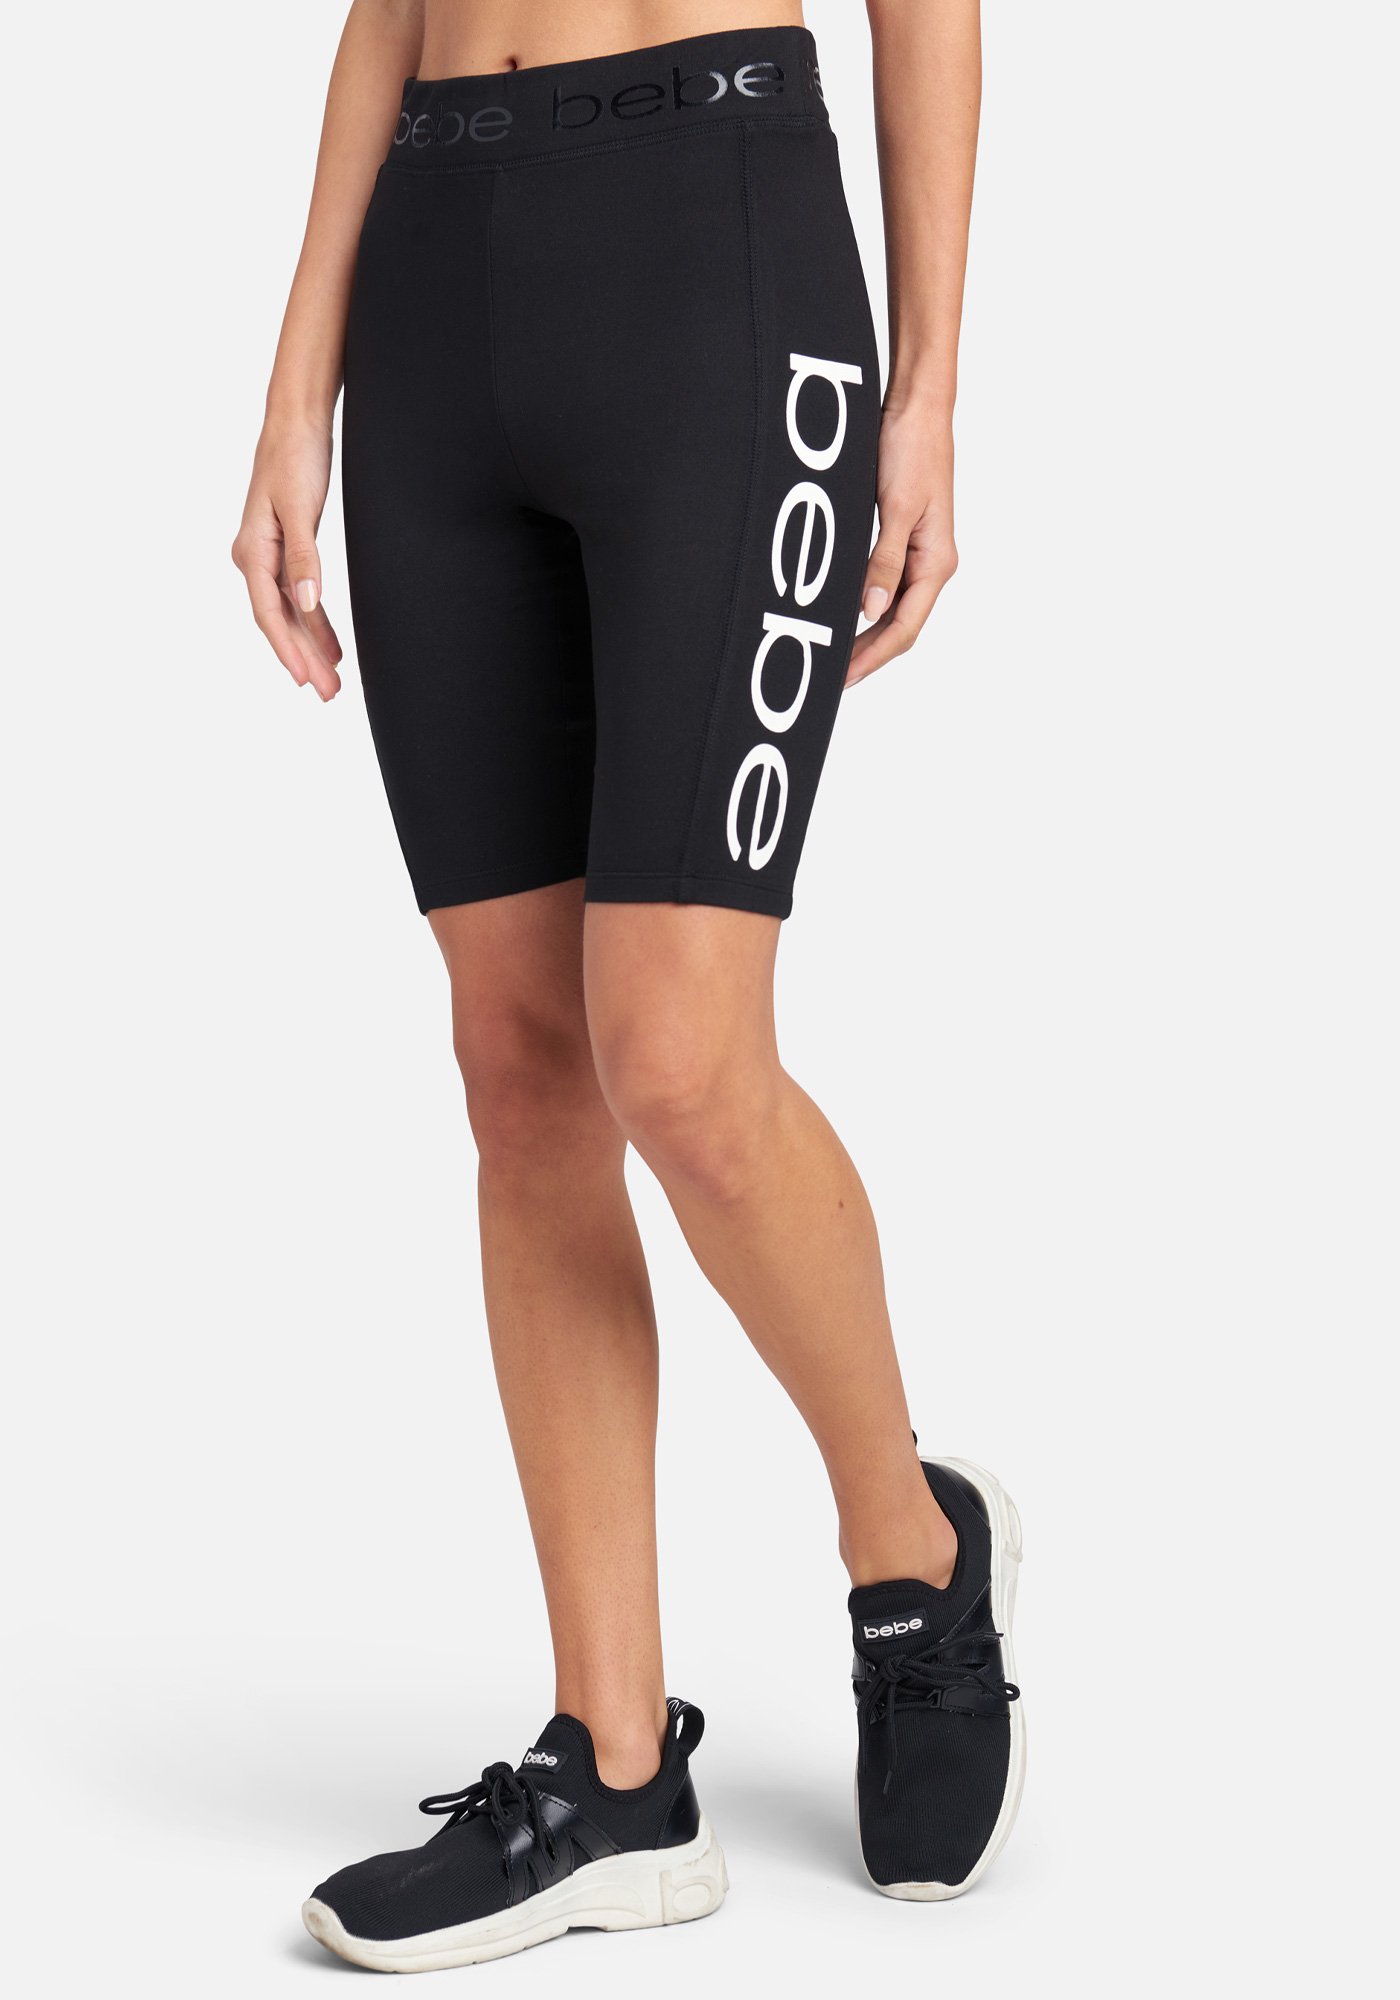 Women's Bebe Logo Biker Shorts, Size Large in Black/White Spandex